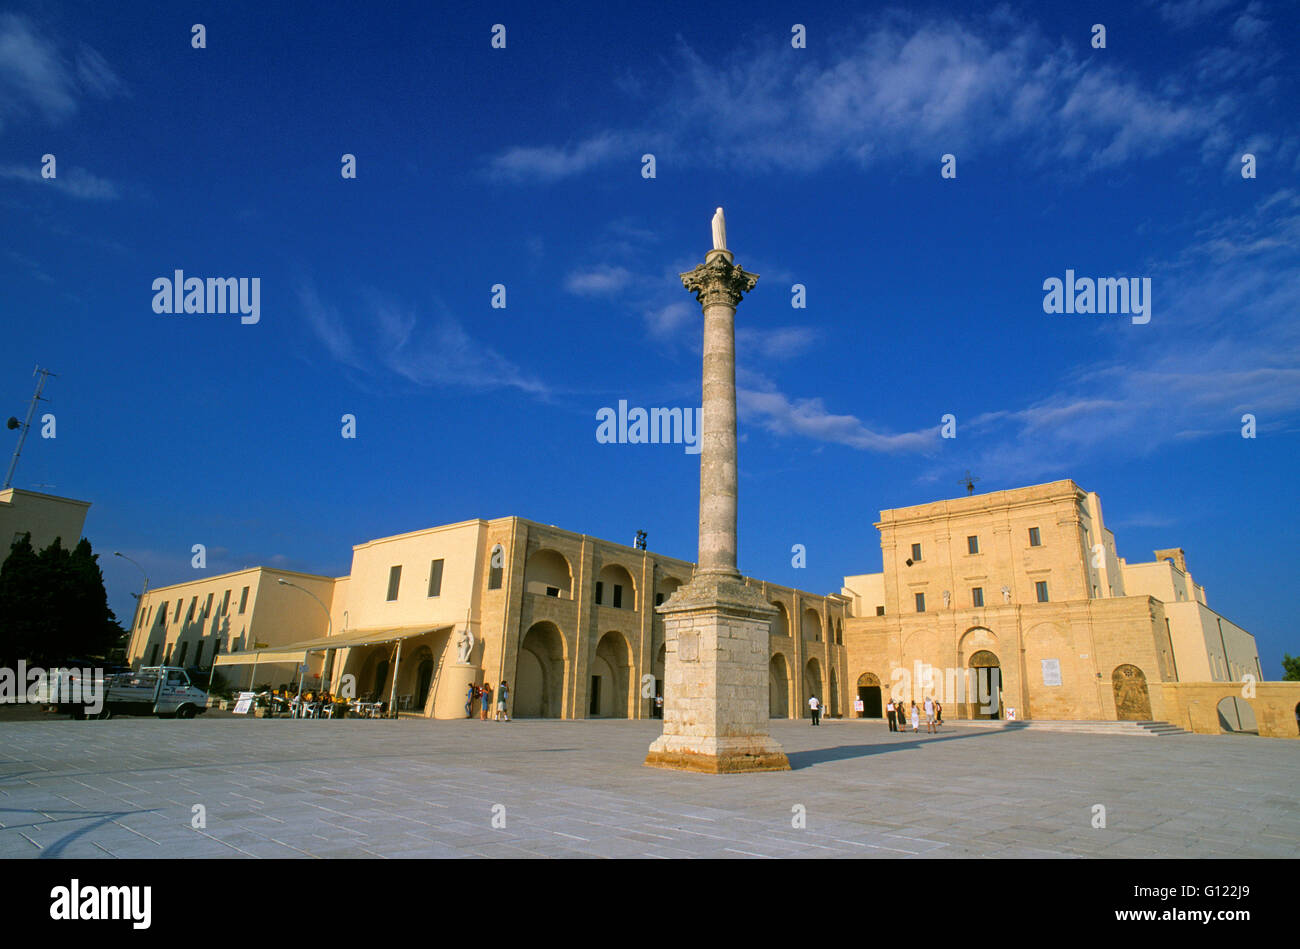 Church of Santa Maria De Finibus Terrae and corinthian column in the square, Santa Maria di Leuca, Puglia, Italy Stock Photo